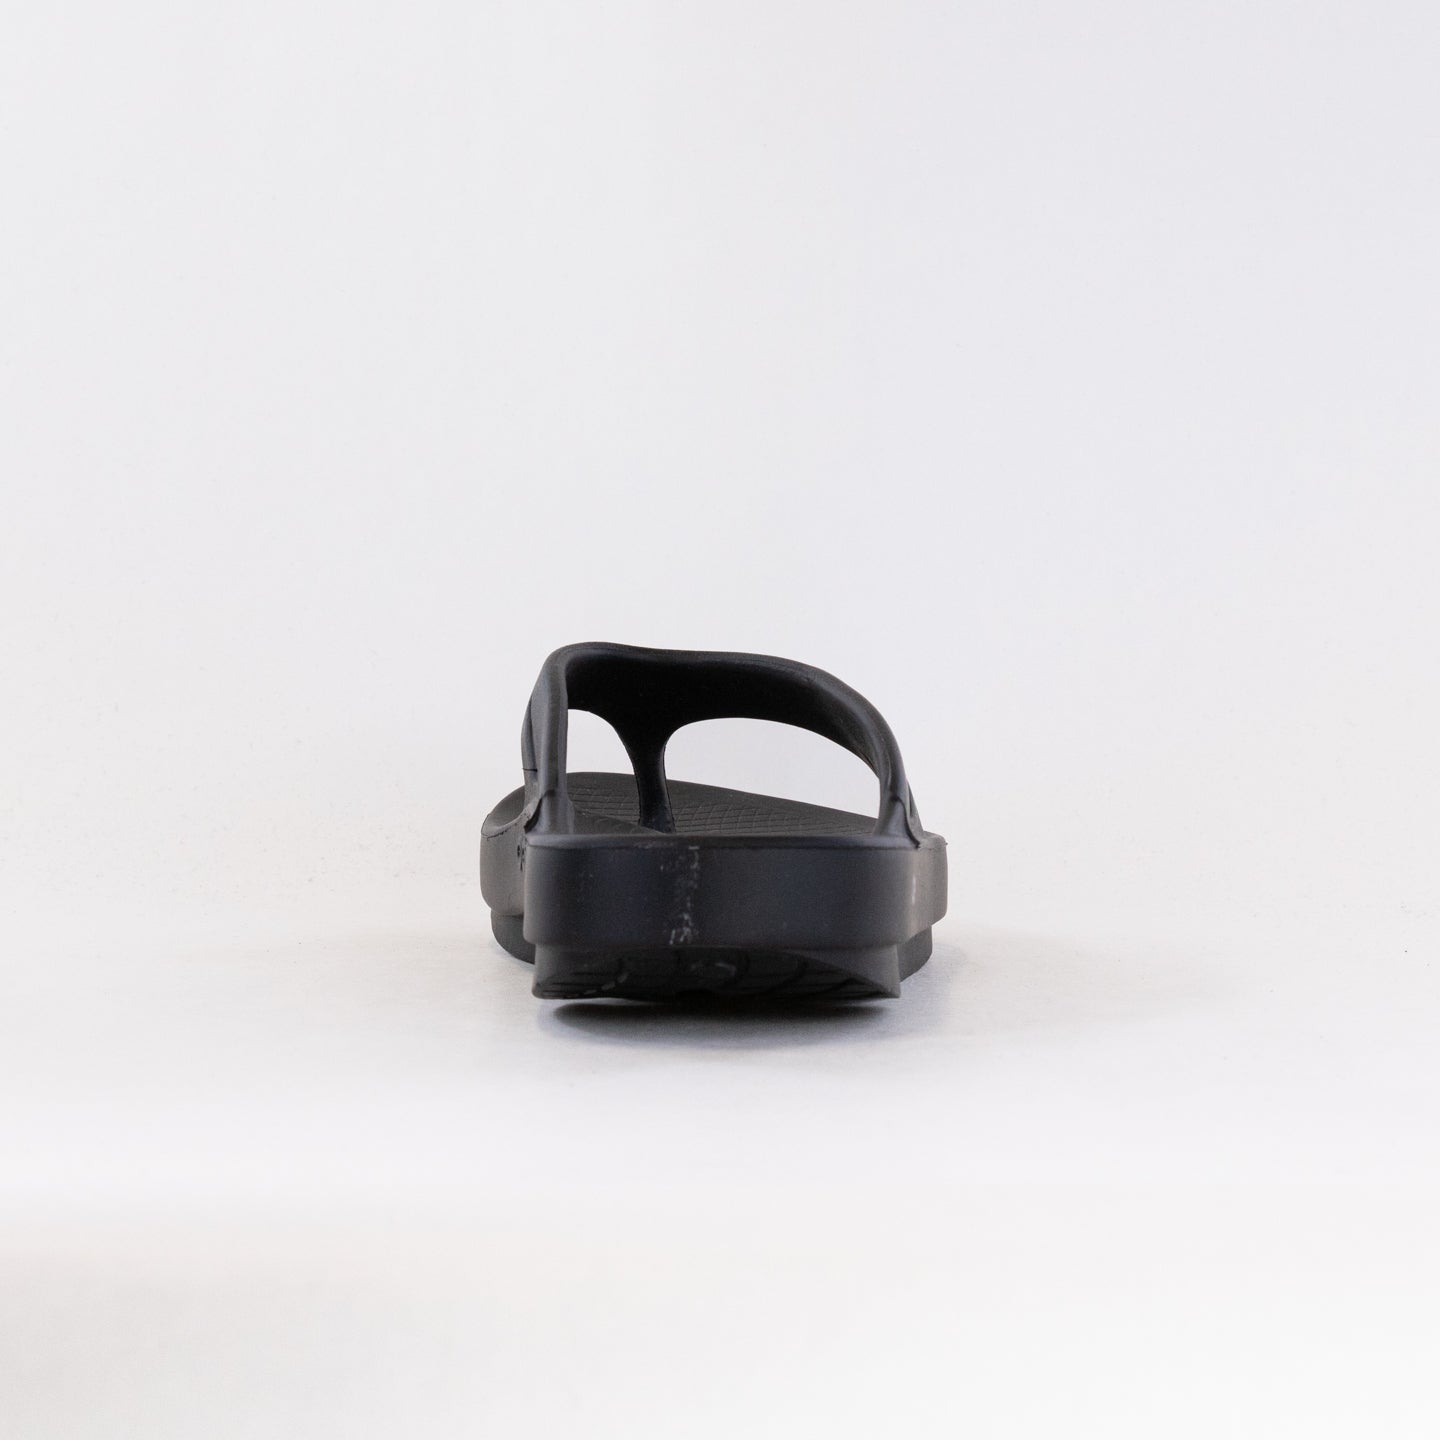 OOFOS Original Sandal (Unisex) - Black